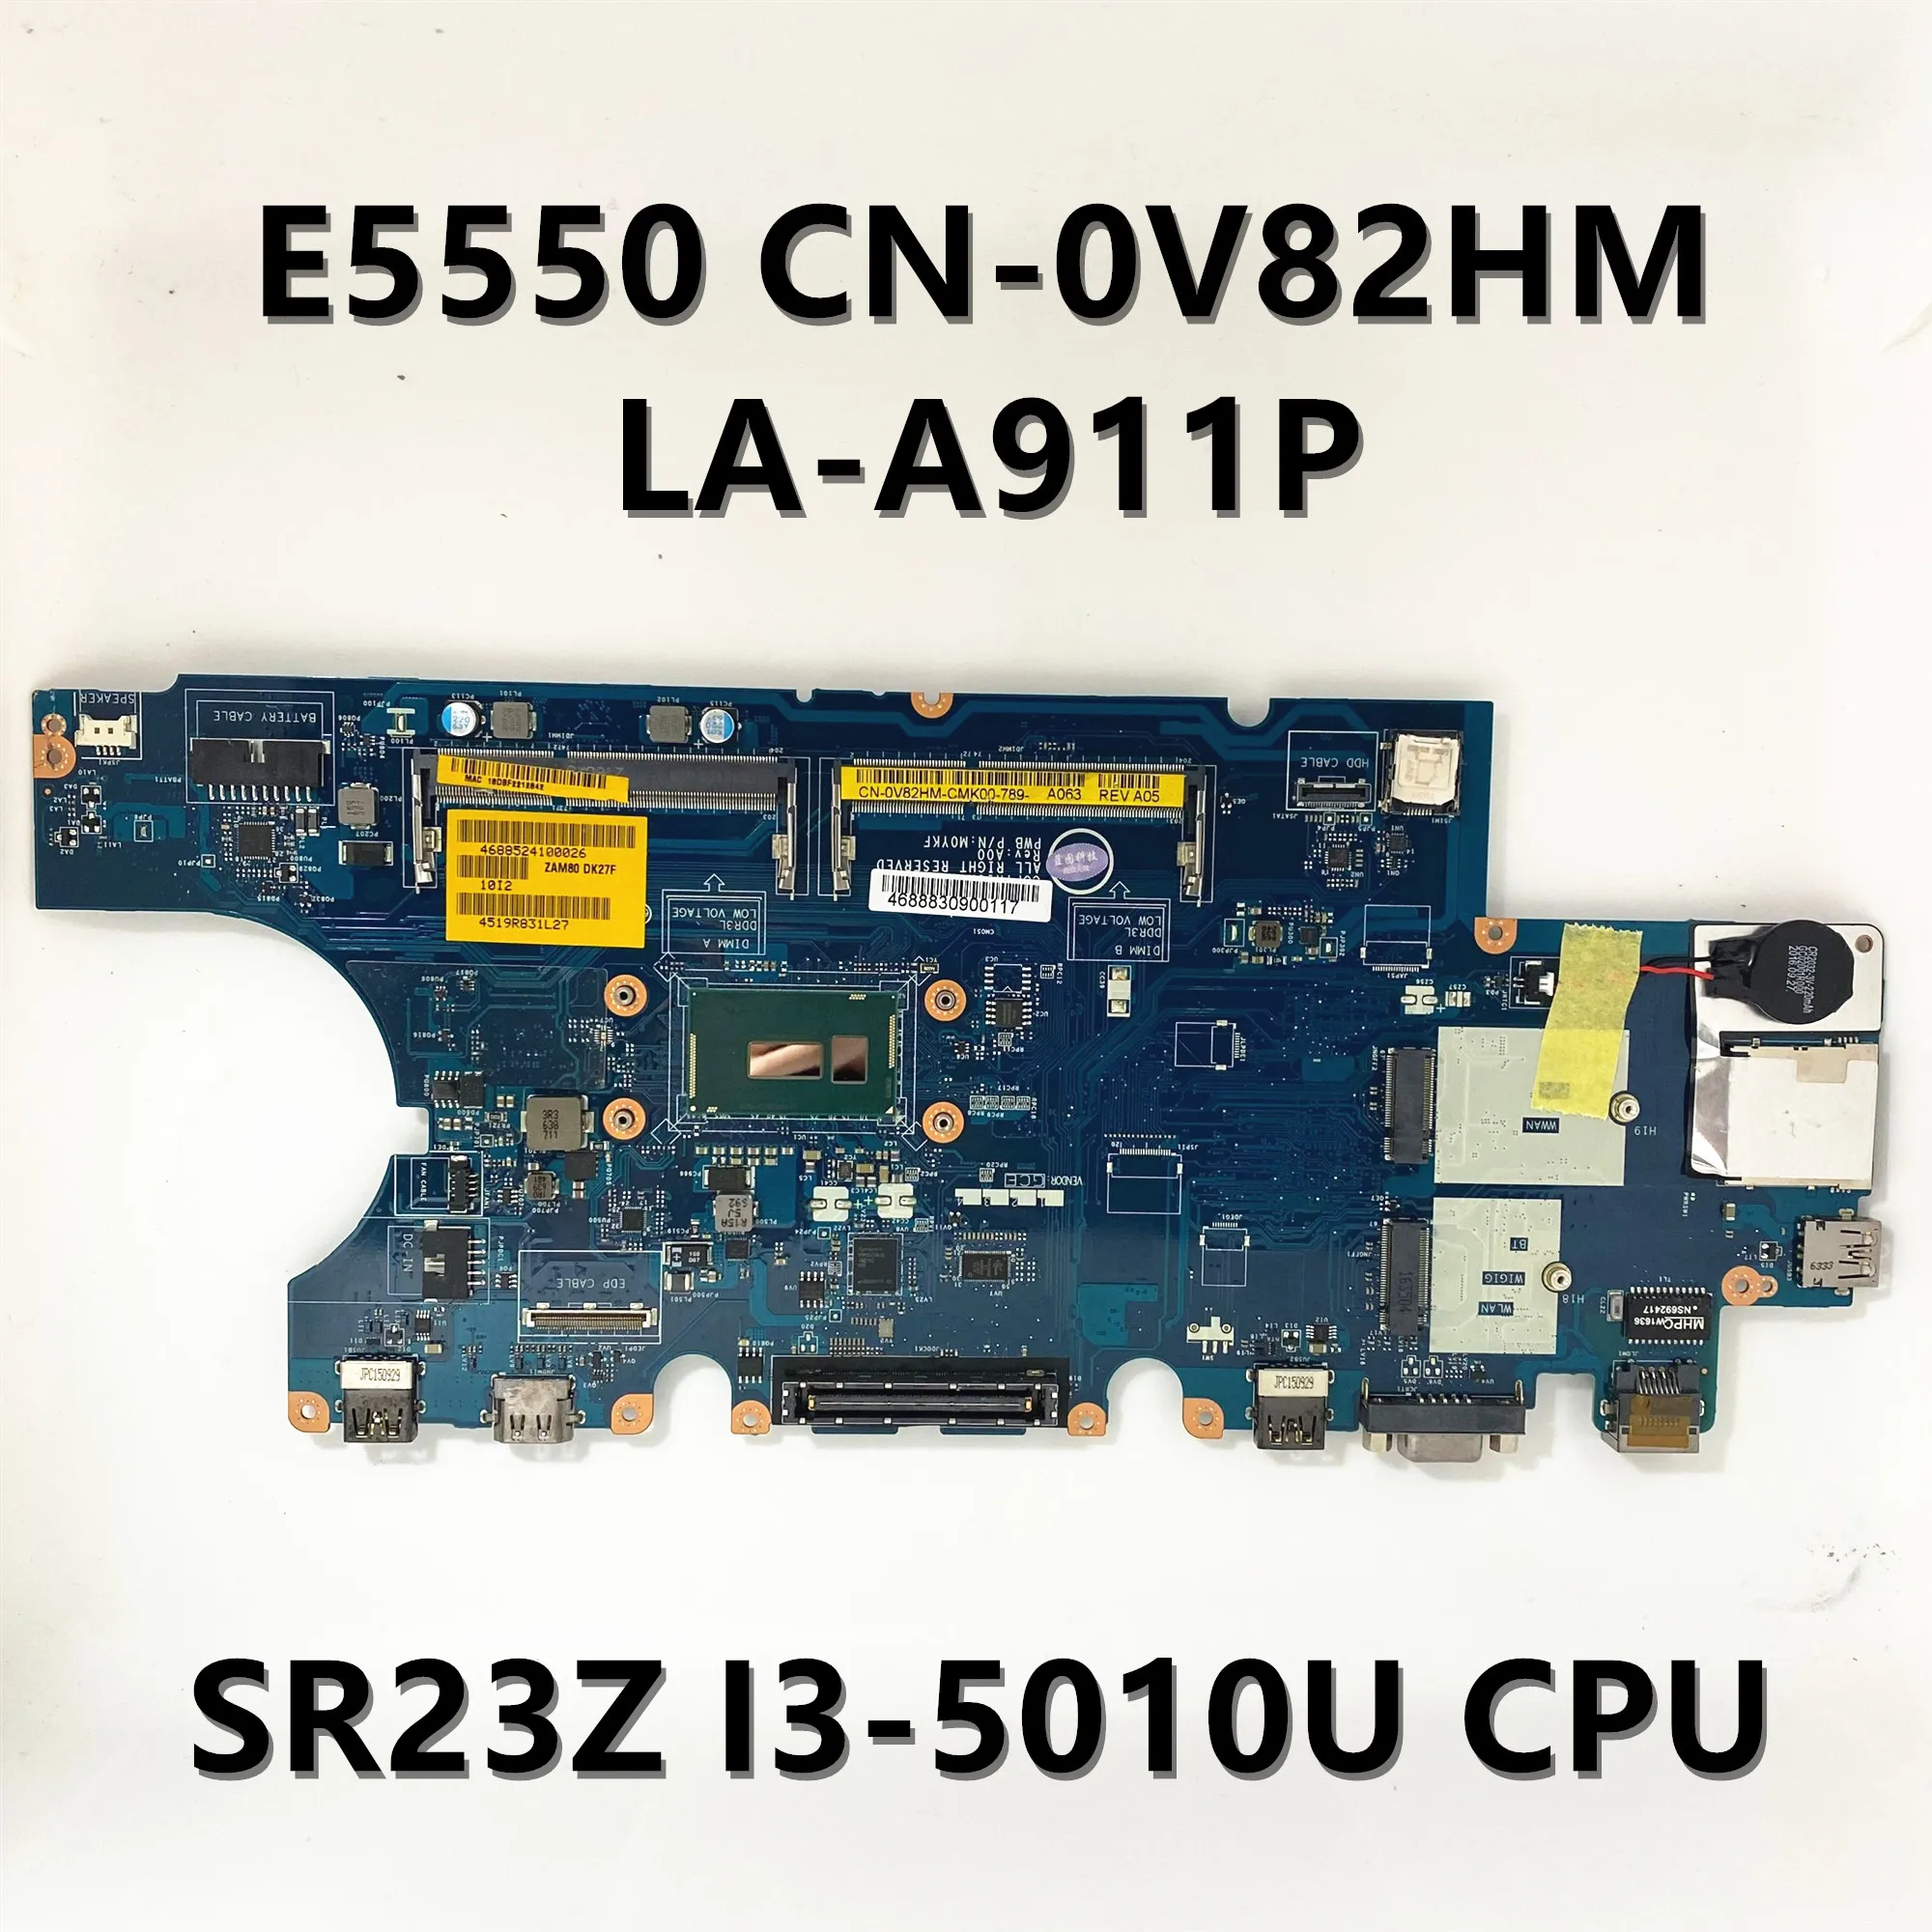 CN-0V82HM 0V82HM V82HM Mainboard For DELL Latitude E5550 Laptop Motherboard LA-A911P W/SR23Z I3-5010U CPU 100% Full Working Well